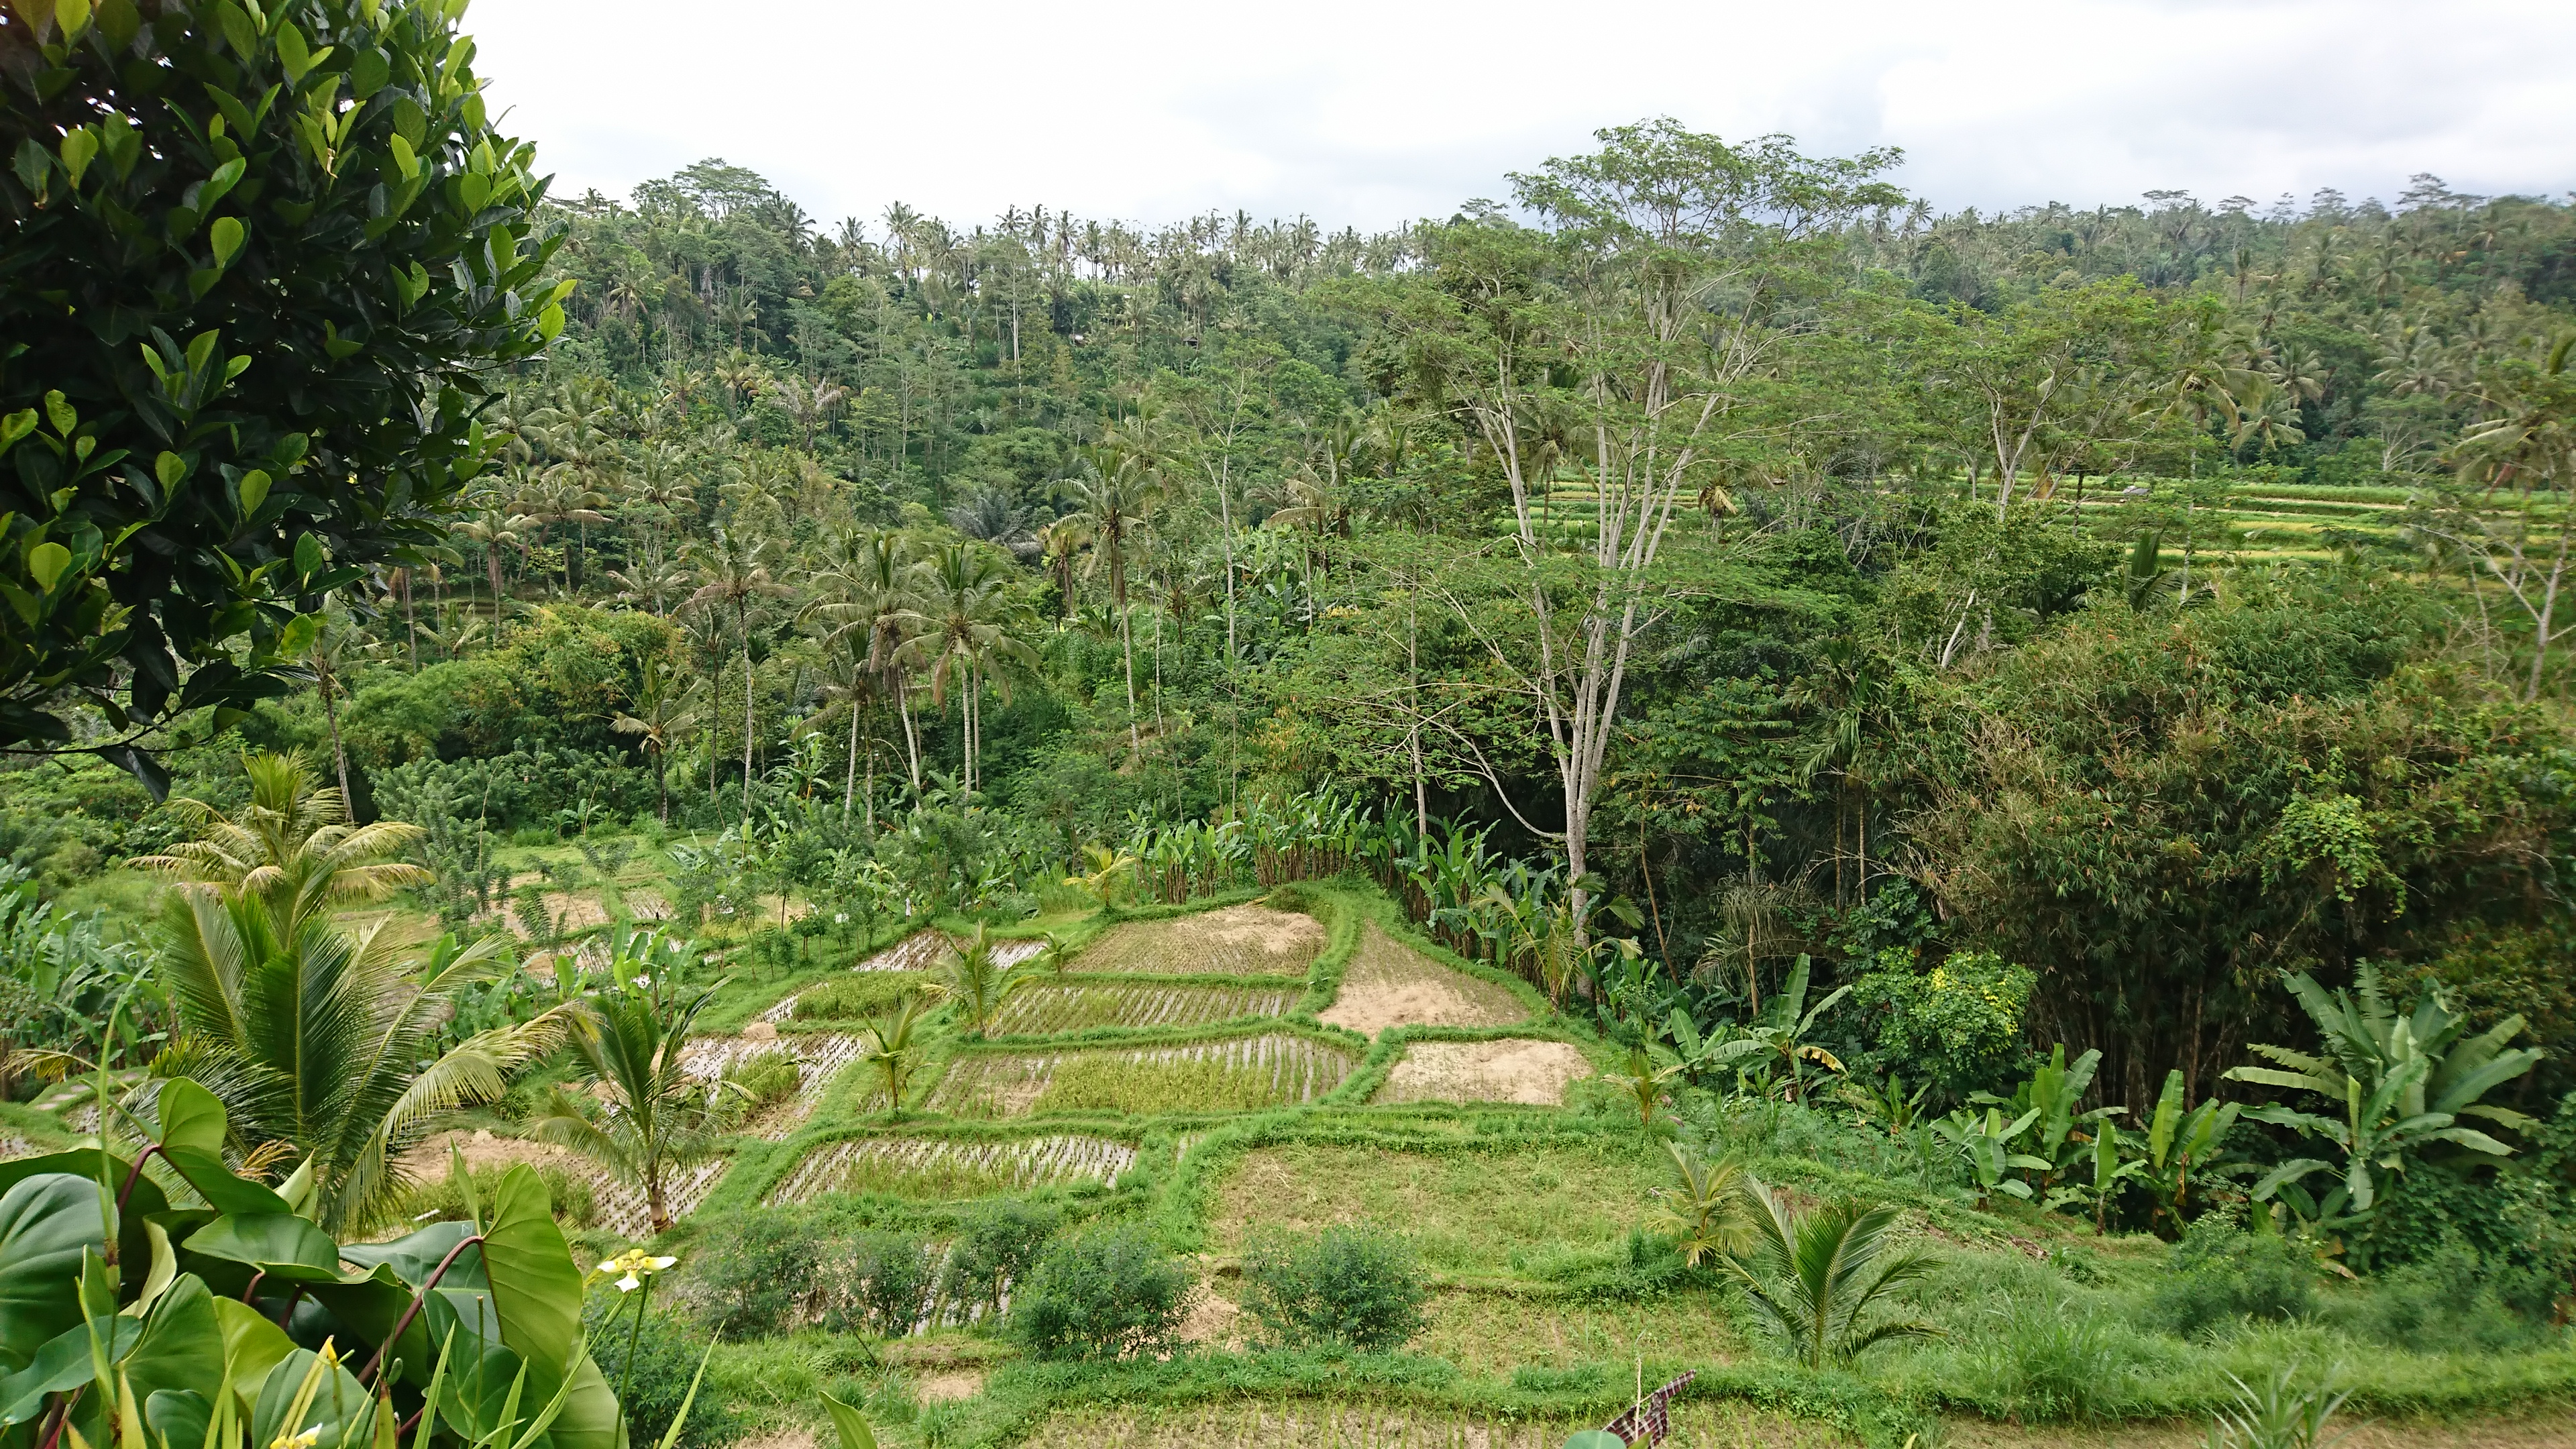 A rice terrace in Bali.